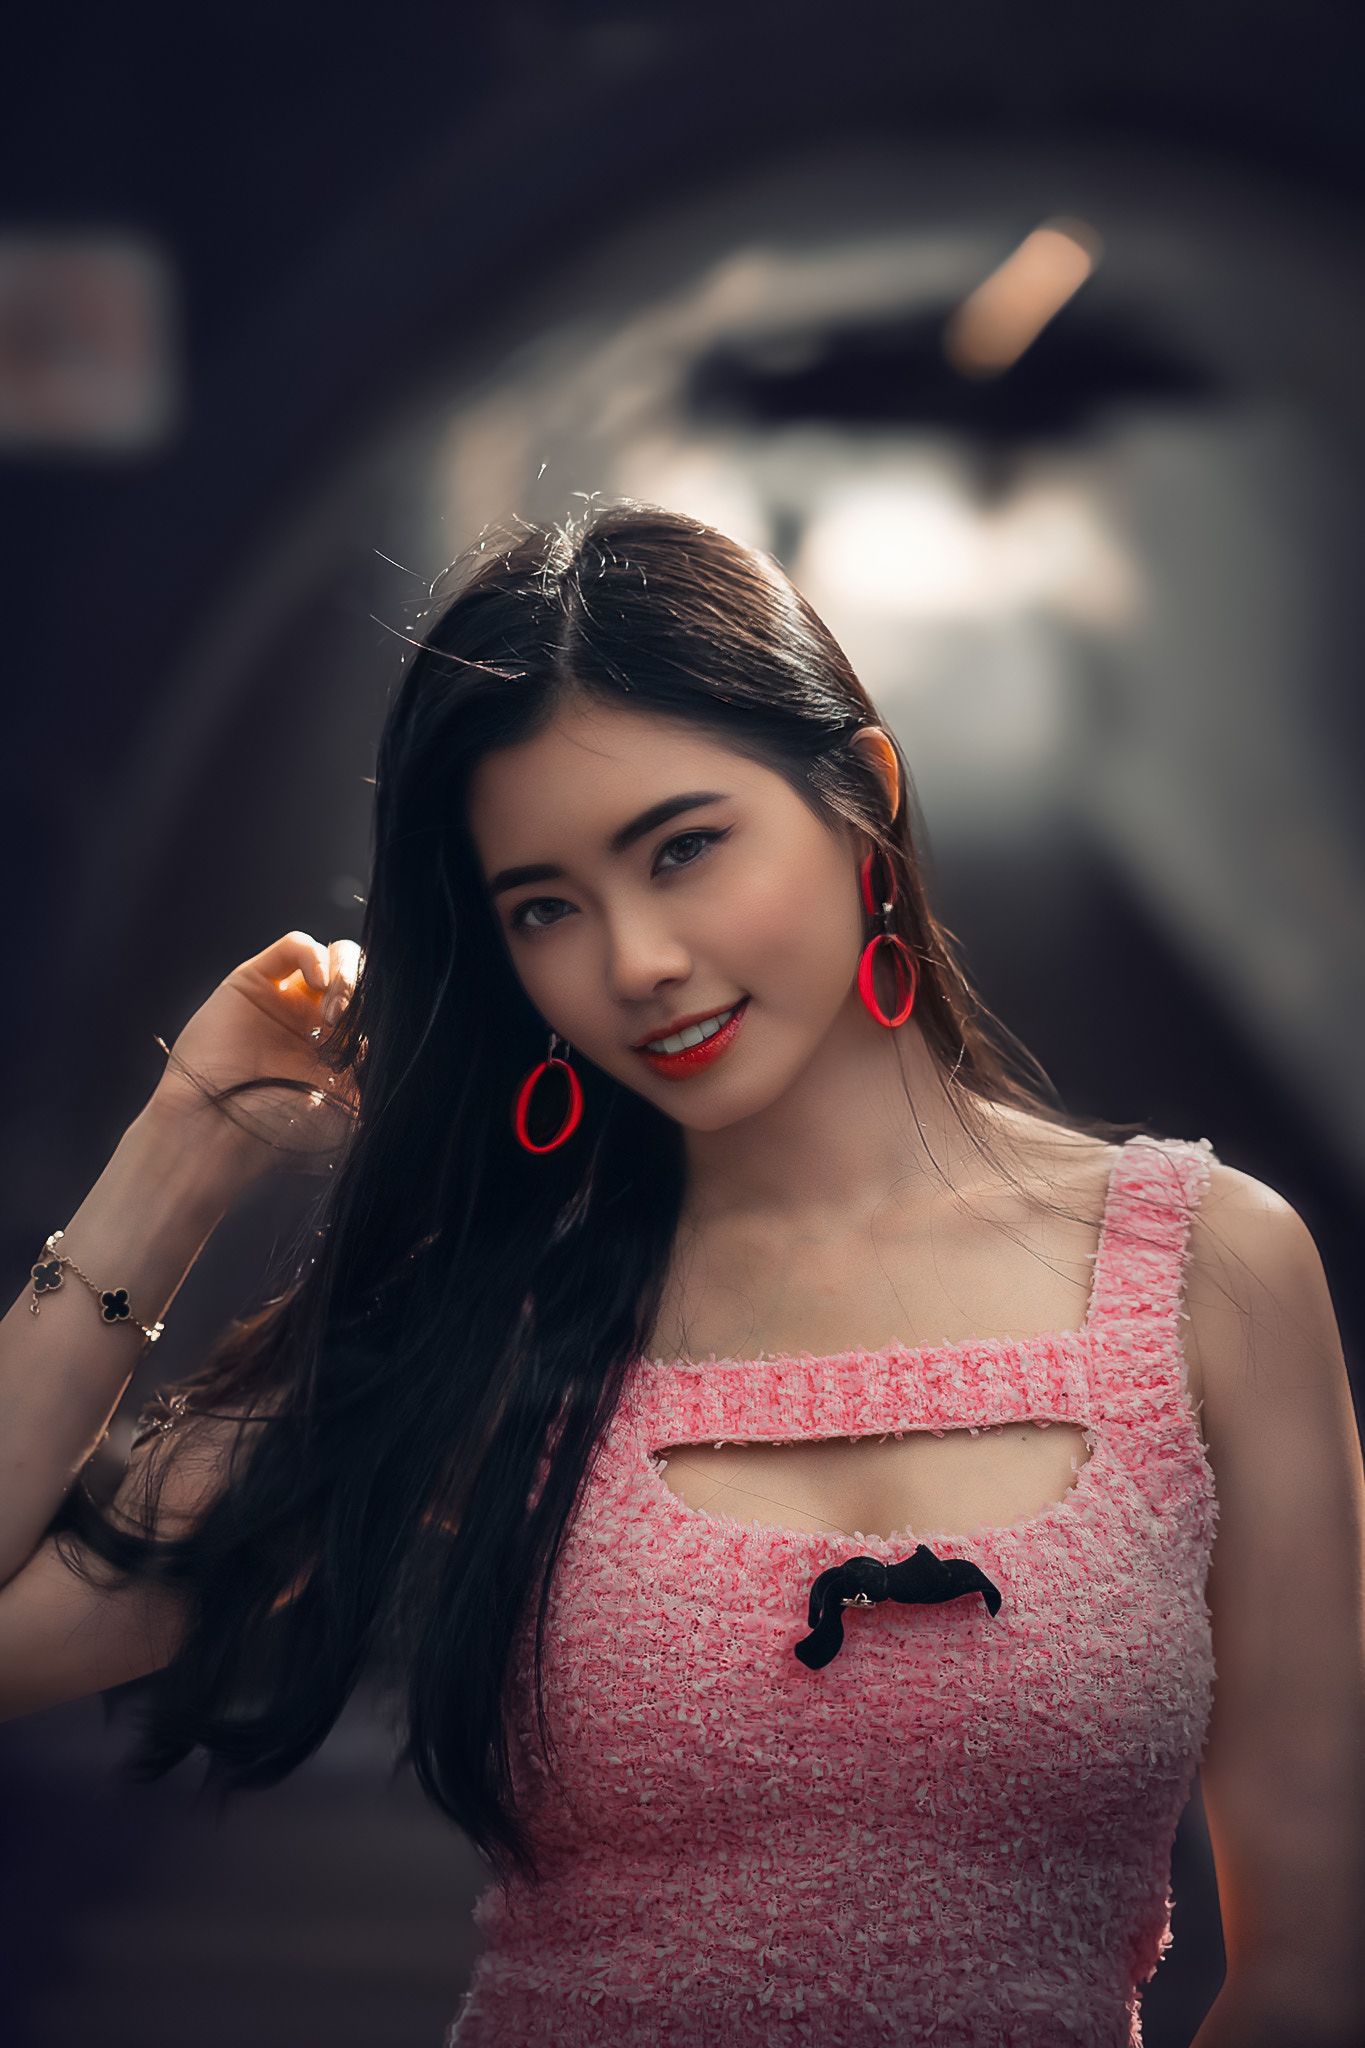 Steven Chiow Women Asian Pink Clothing Portrait Red Lipstick 1365x2048